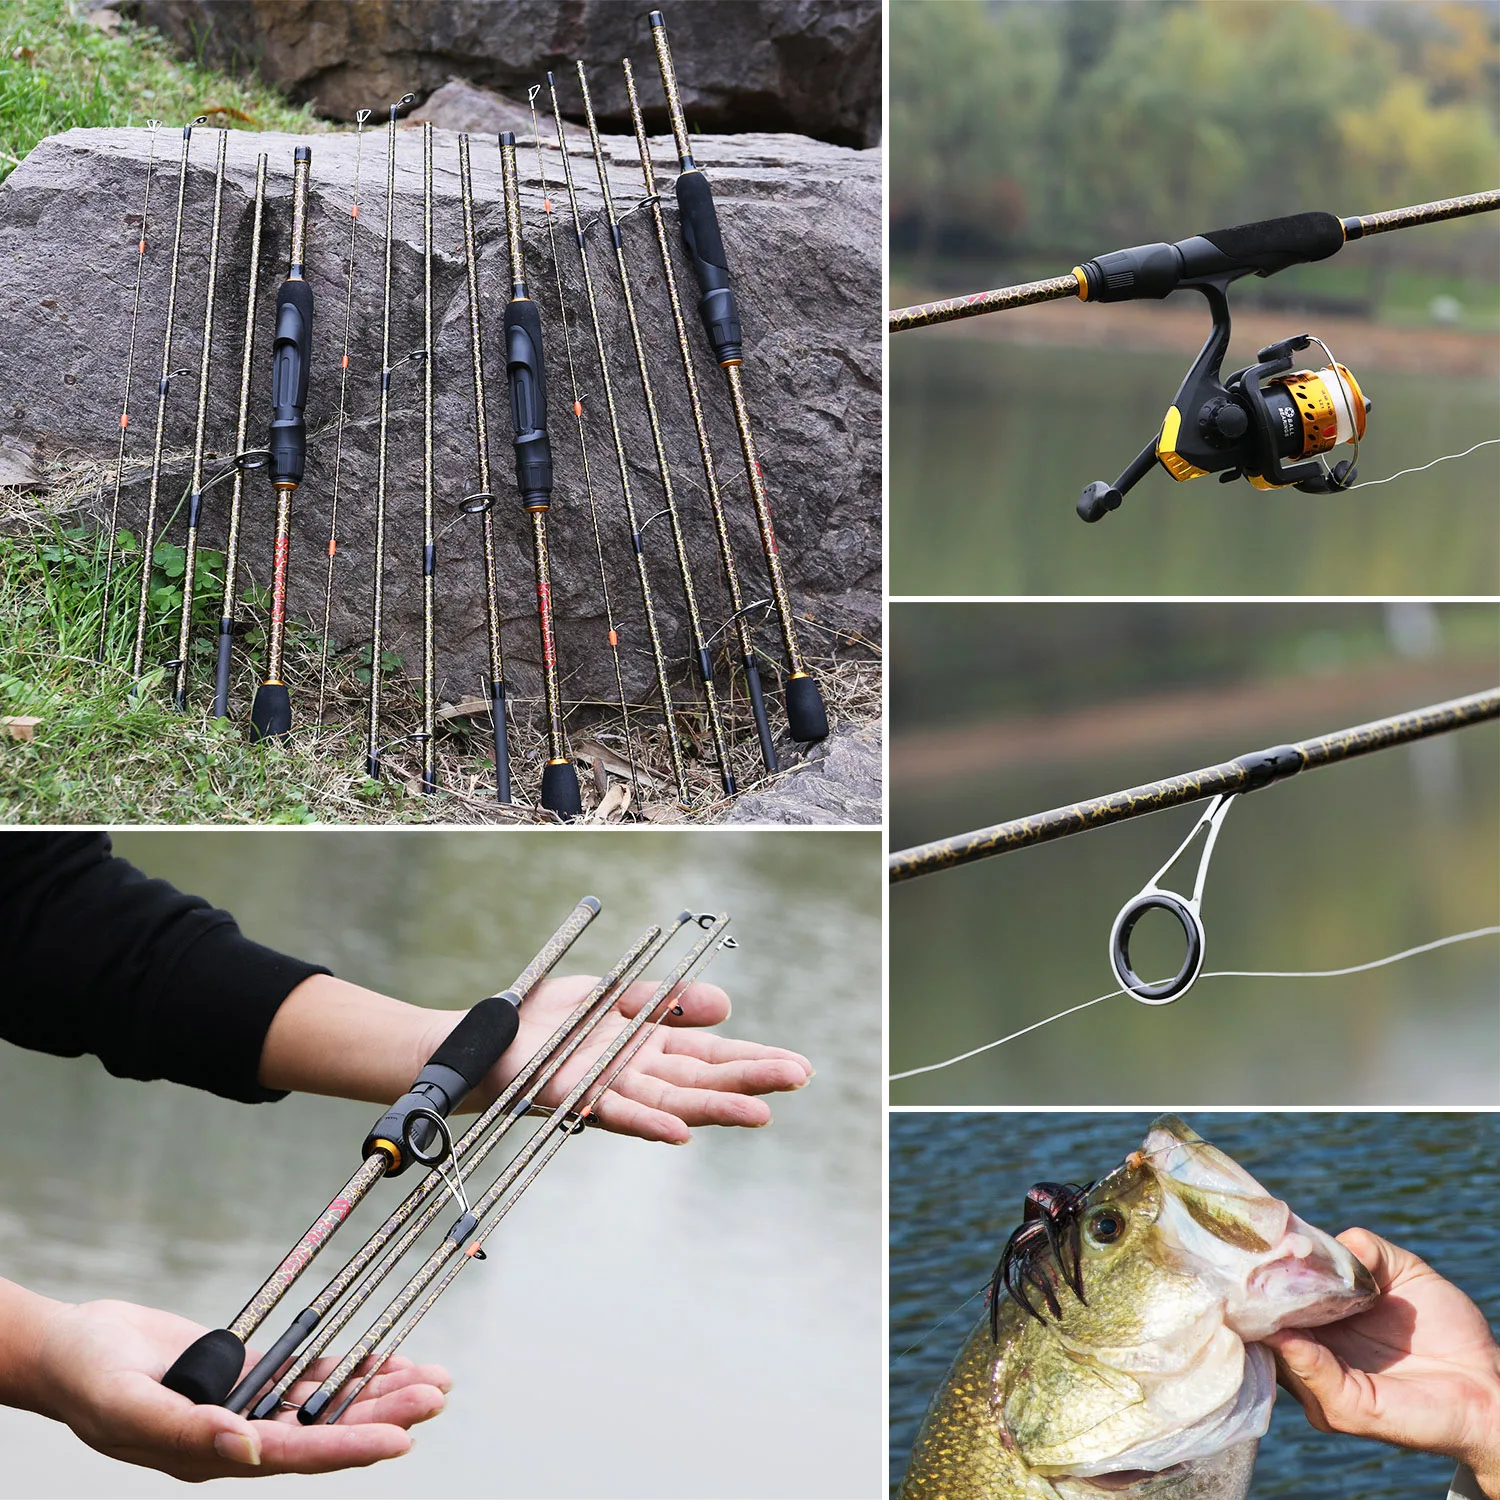 Sougayilang 5 Section Portable Fishing Rod1.8-2.4m Ultralight Carbon